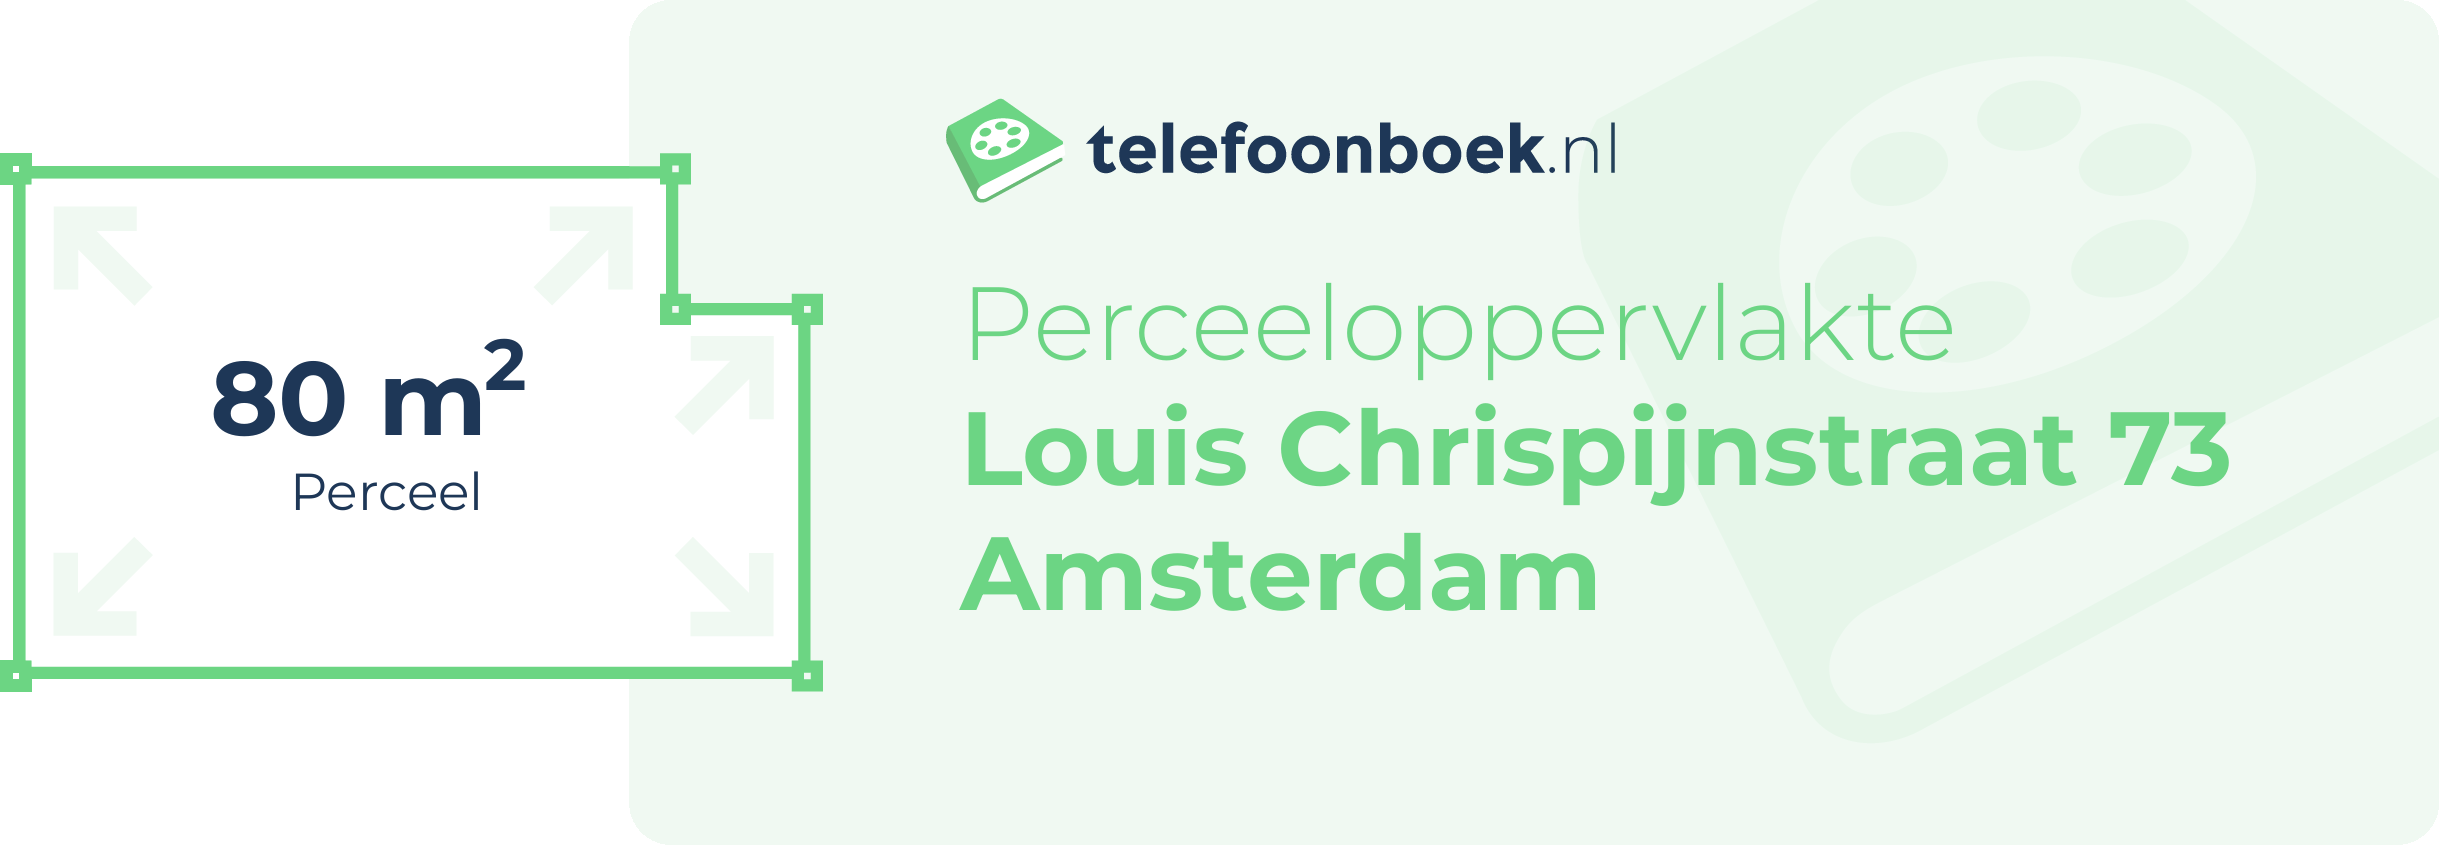 Perceeloppervlakte Louis Chrispijnstraat 73 Amsterdam